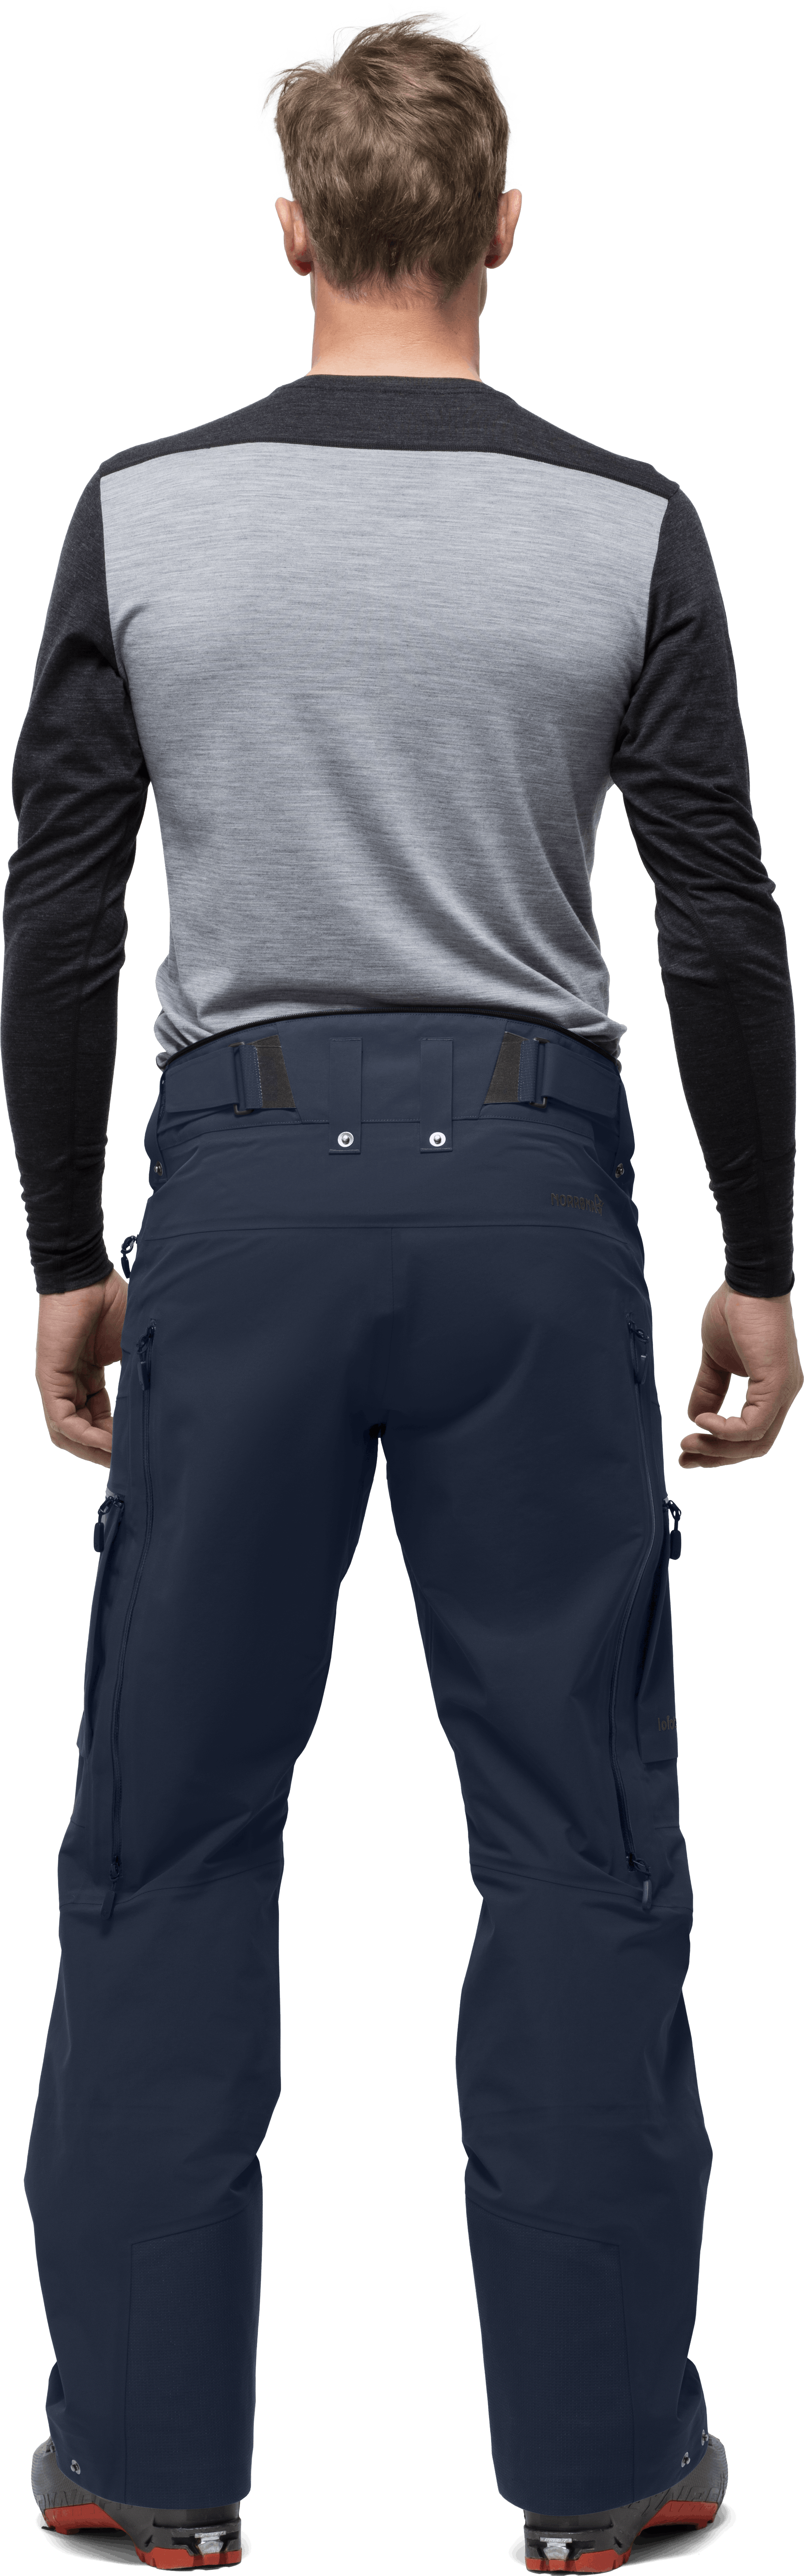 Norrona Men's Lofoten GORE-TEX Pants